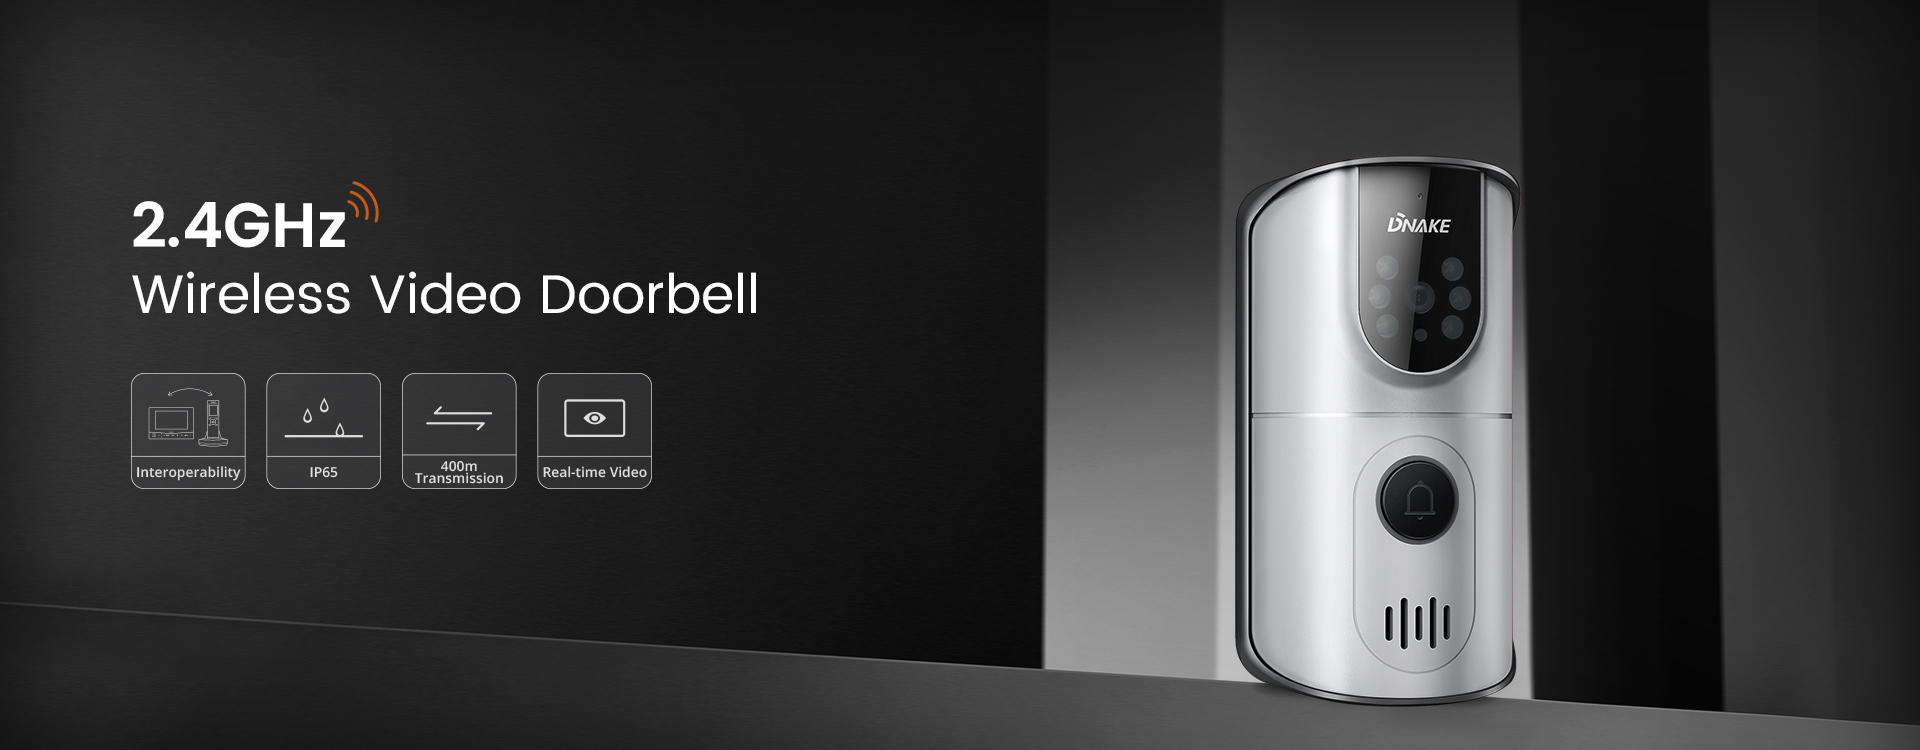 221101-1102-Wireless-Doorbell-Banner-1920x750px